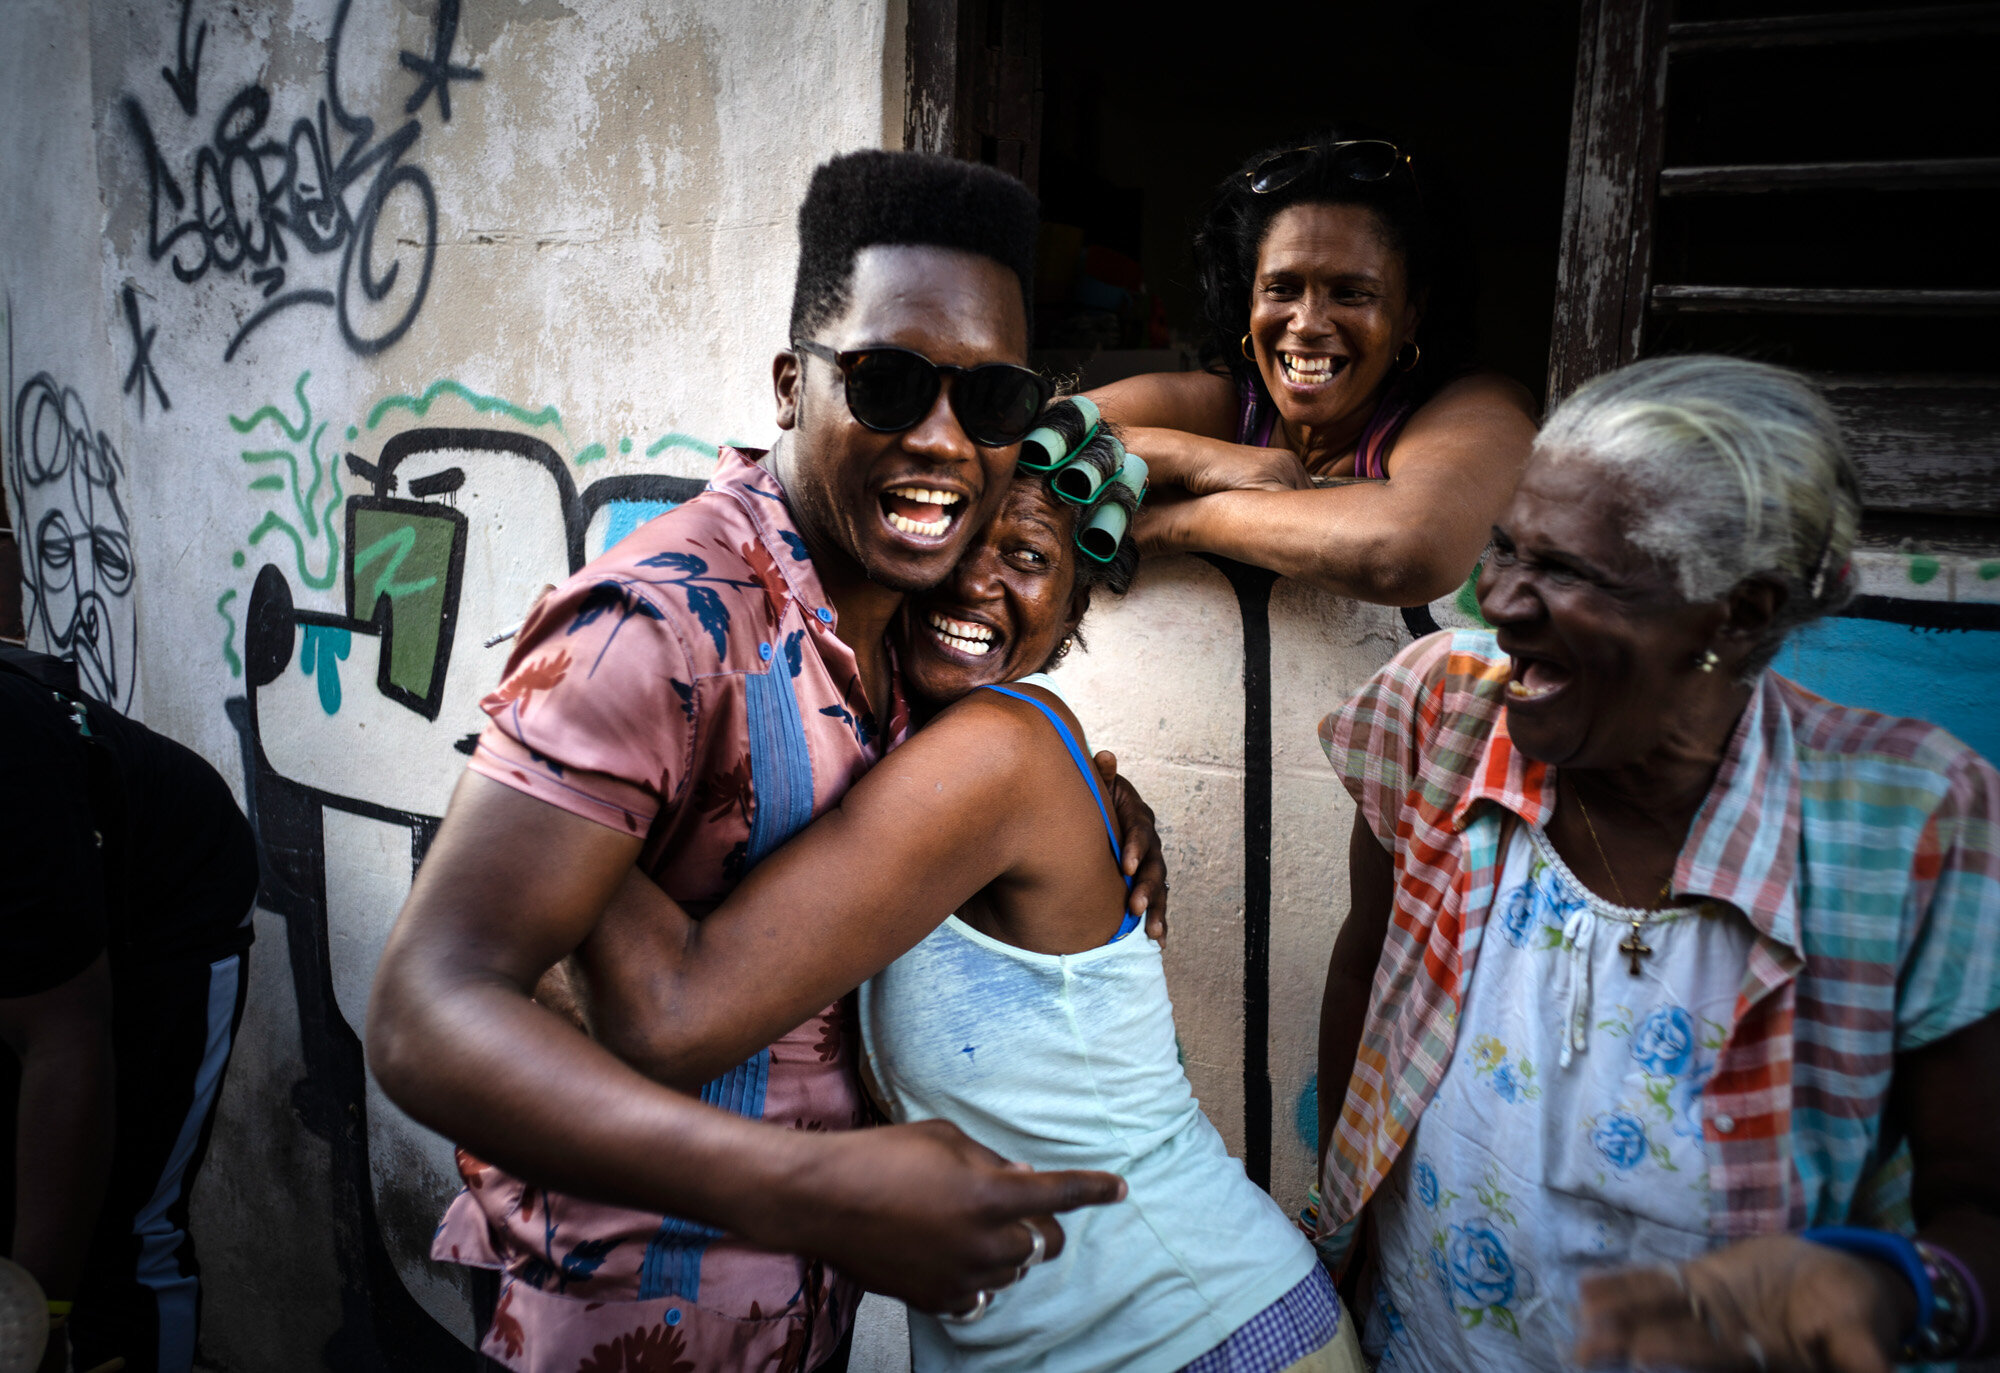  Cuban singer Cimafunk hugs a woman during a music conga through the streets of Cuba’s Old Havana neighborhood during the 35th Havana International Jazz Festival on Jan. 15, 2020. (AP Photo/Ramon Espinosa) 